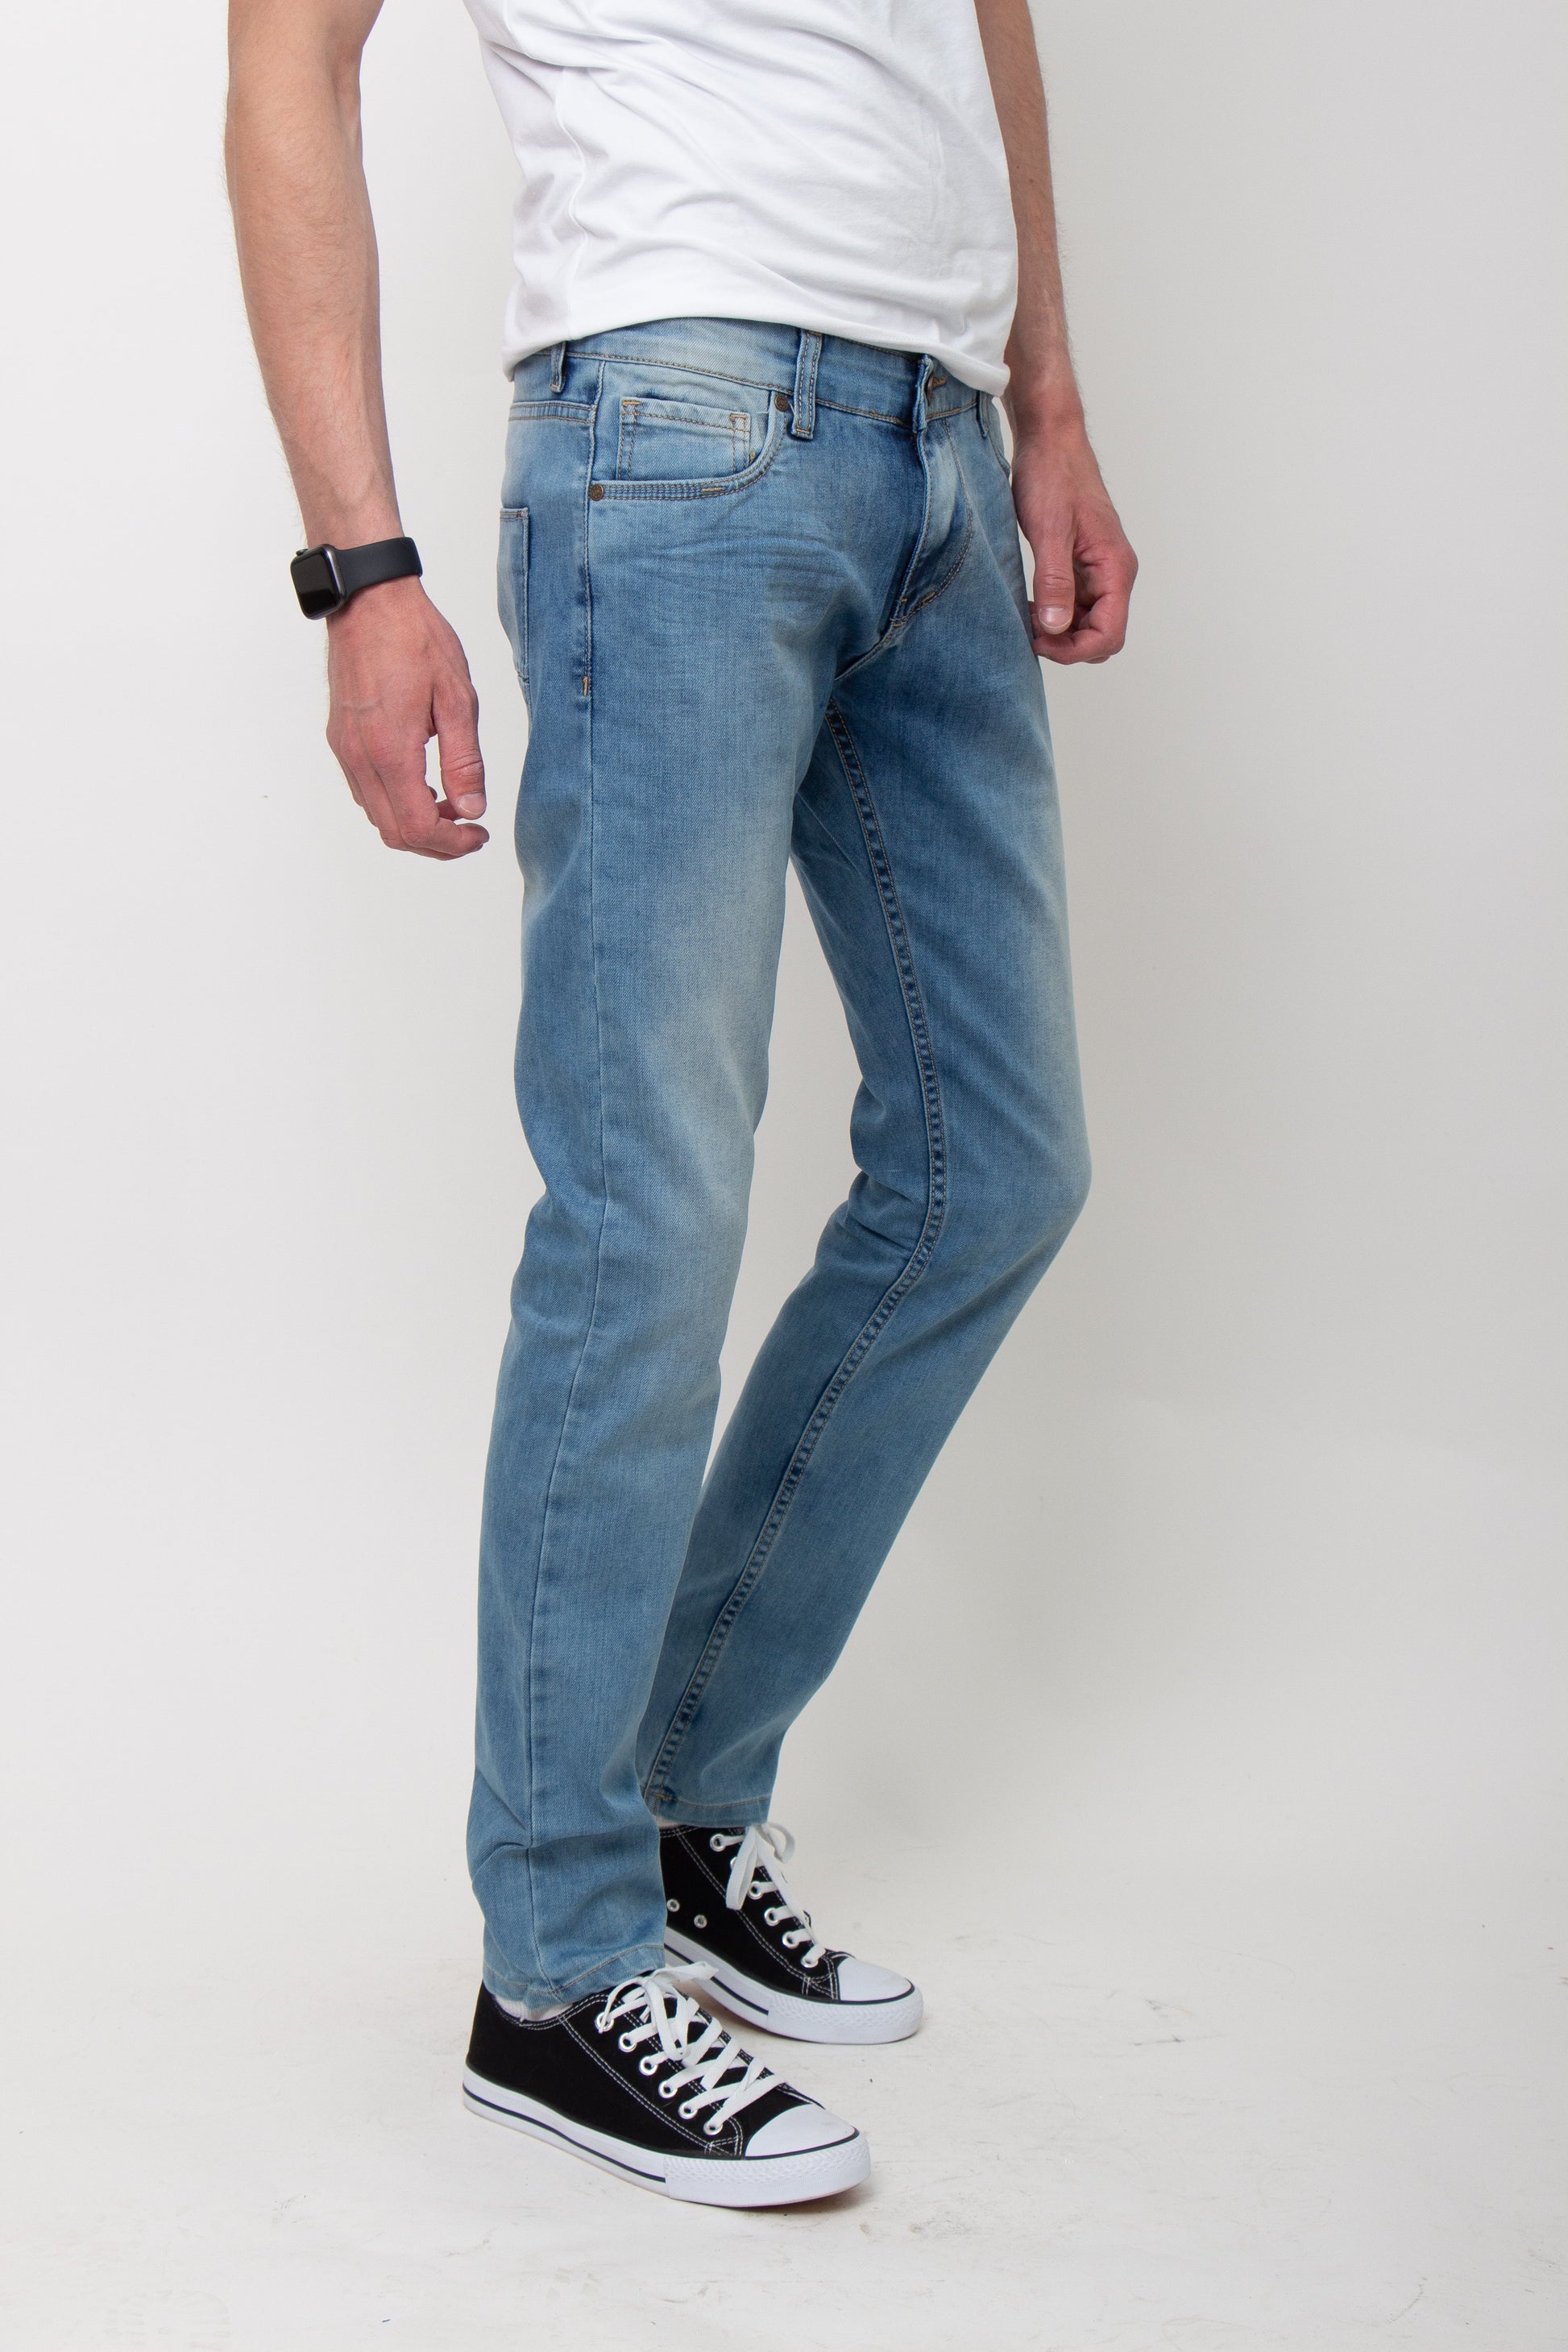 Porto Jeans-1